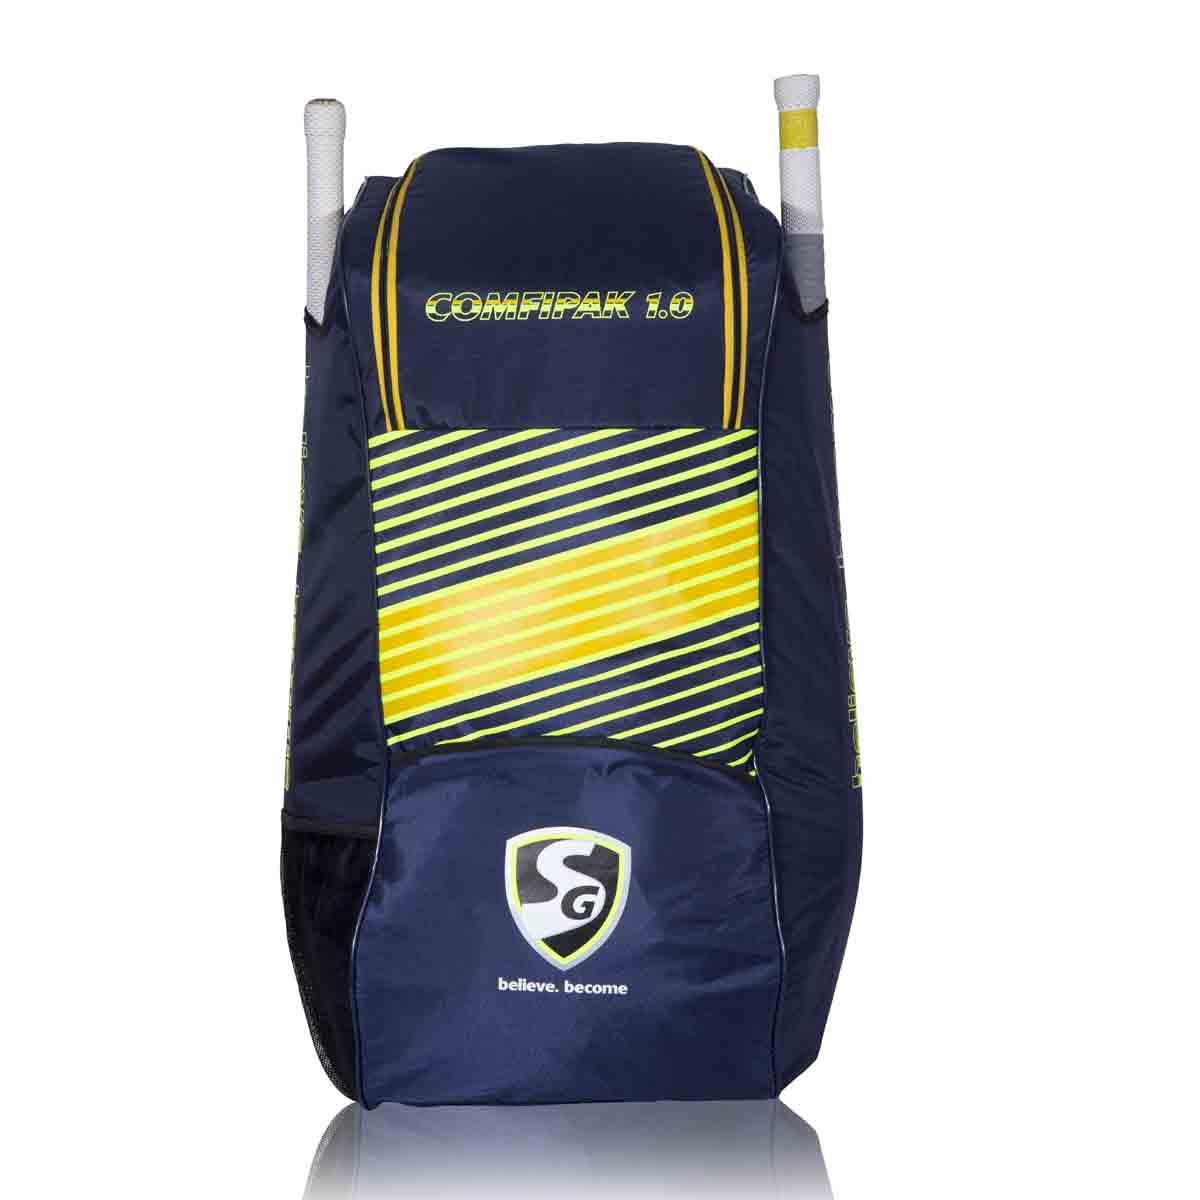 SG comfipak 1.0 cricket kit bag